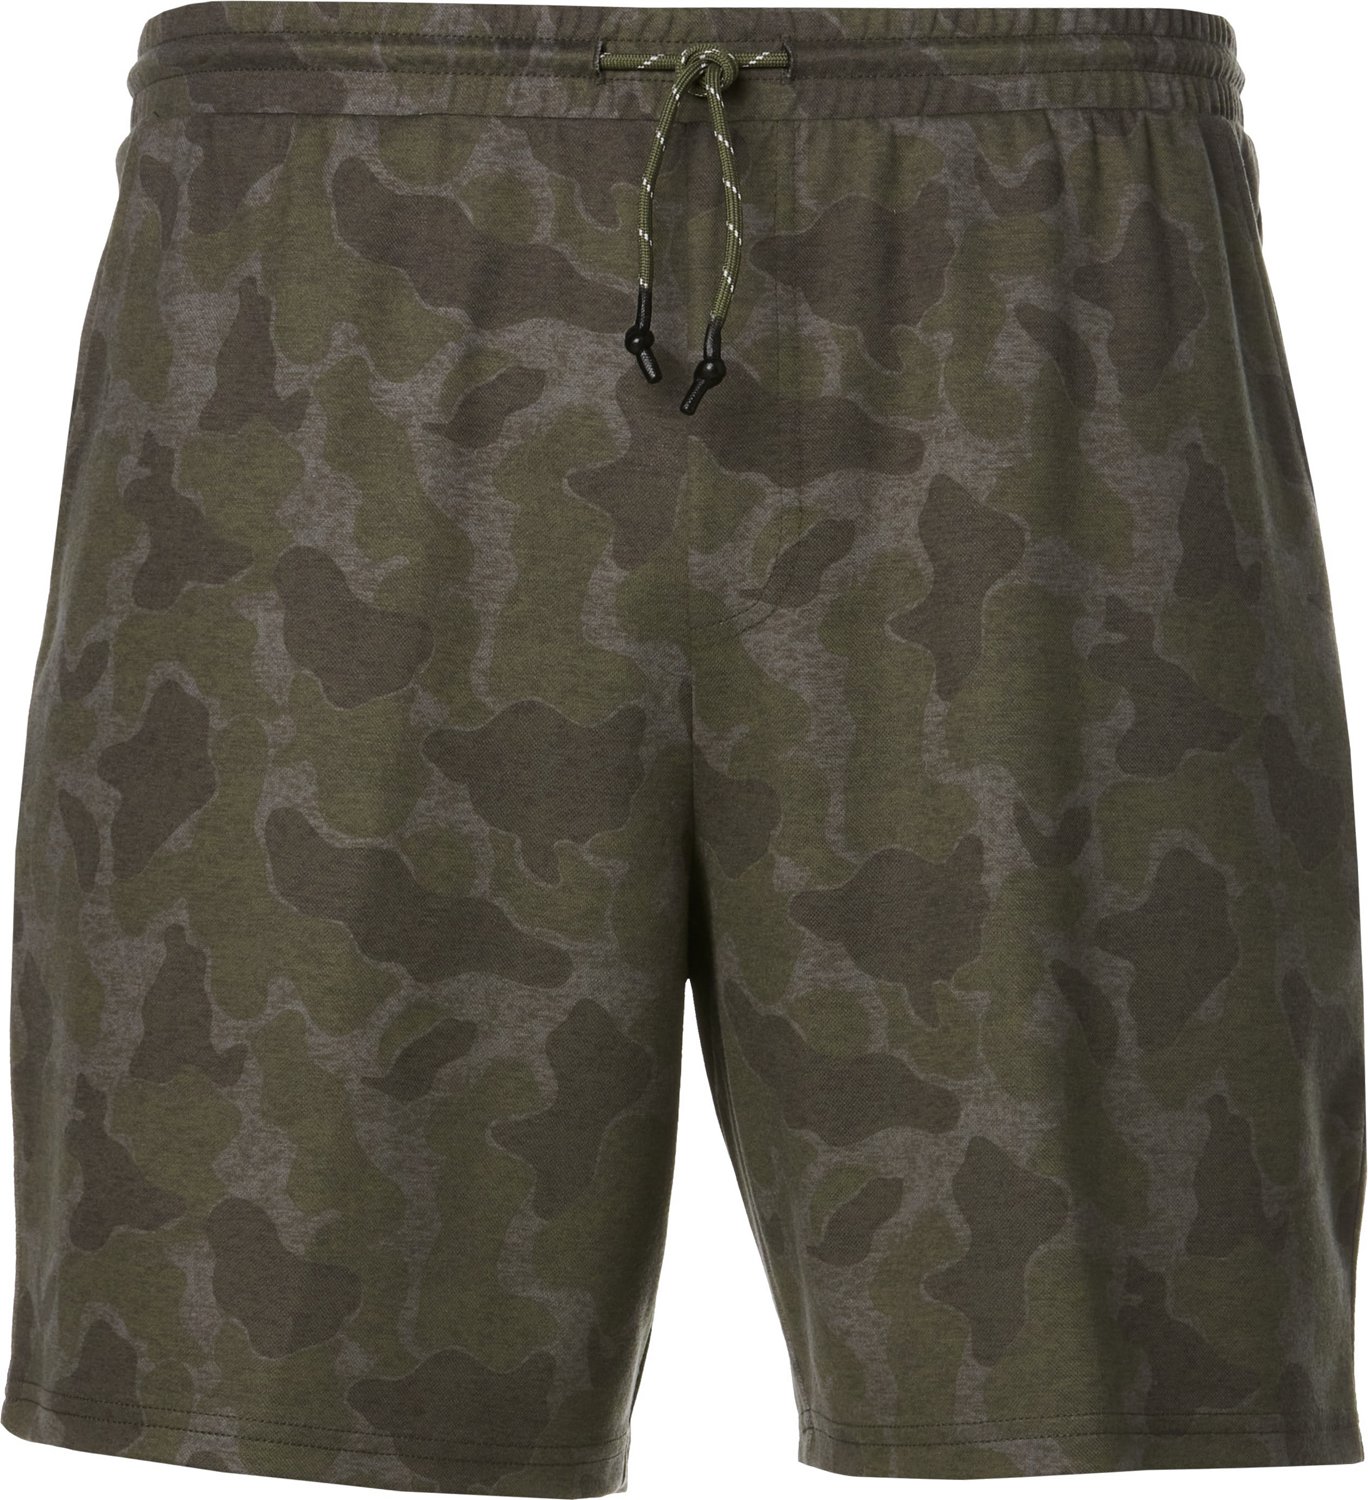 Magellan Outdoors Shorts | Magellan Men Shorts Tan 42 New Rn#098223 | Color: Tan | Size: 42 | Cochrancj1987's Closet